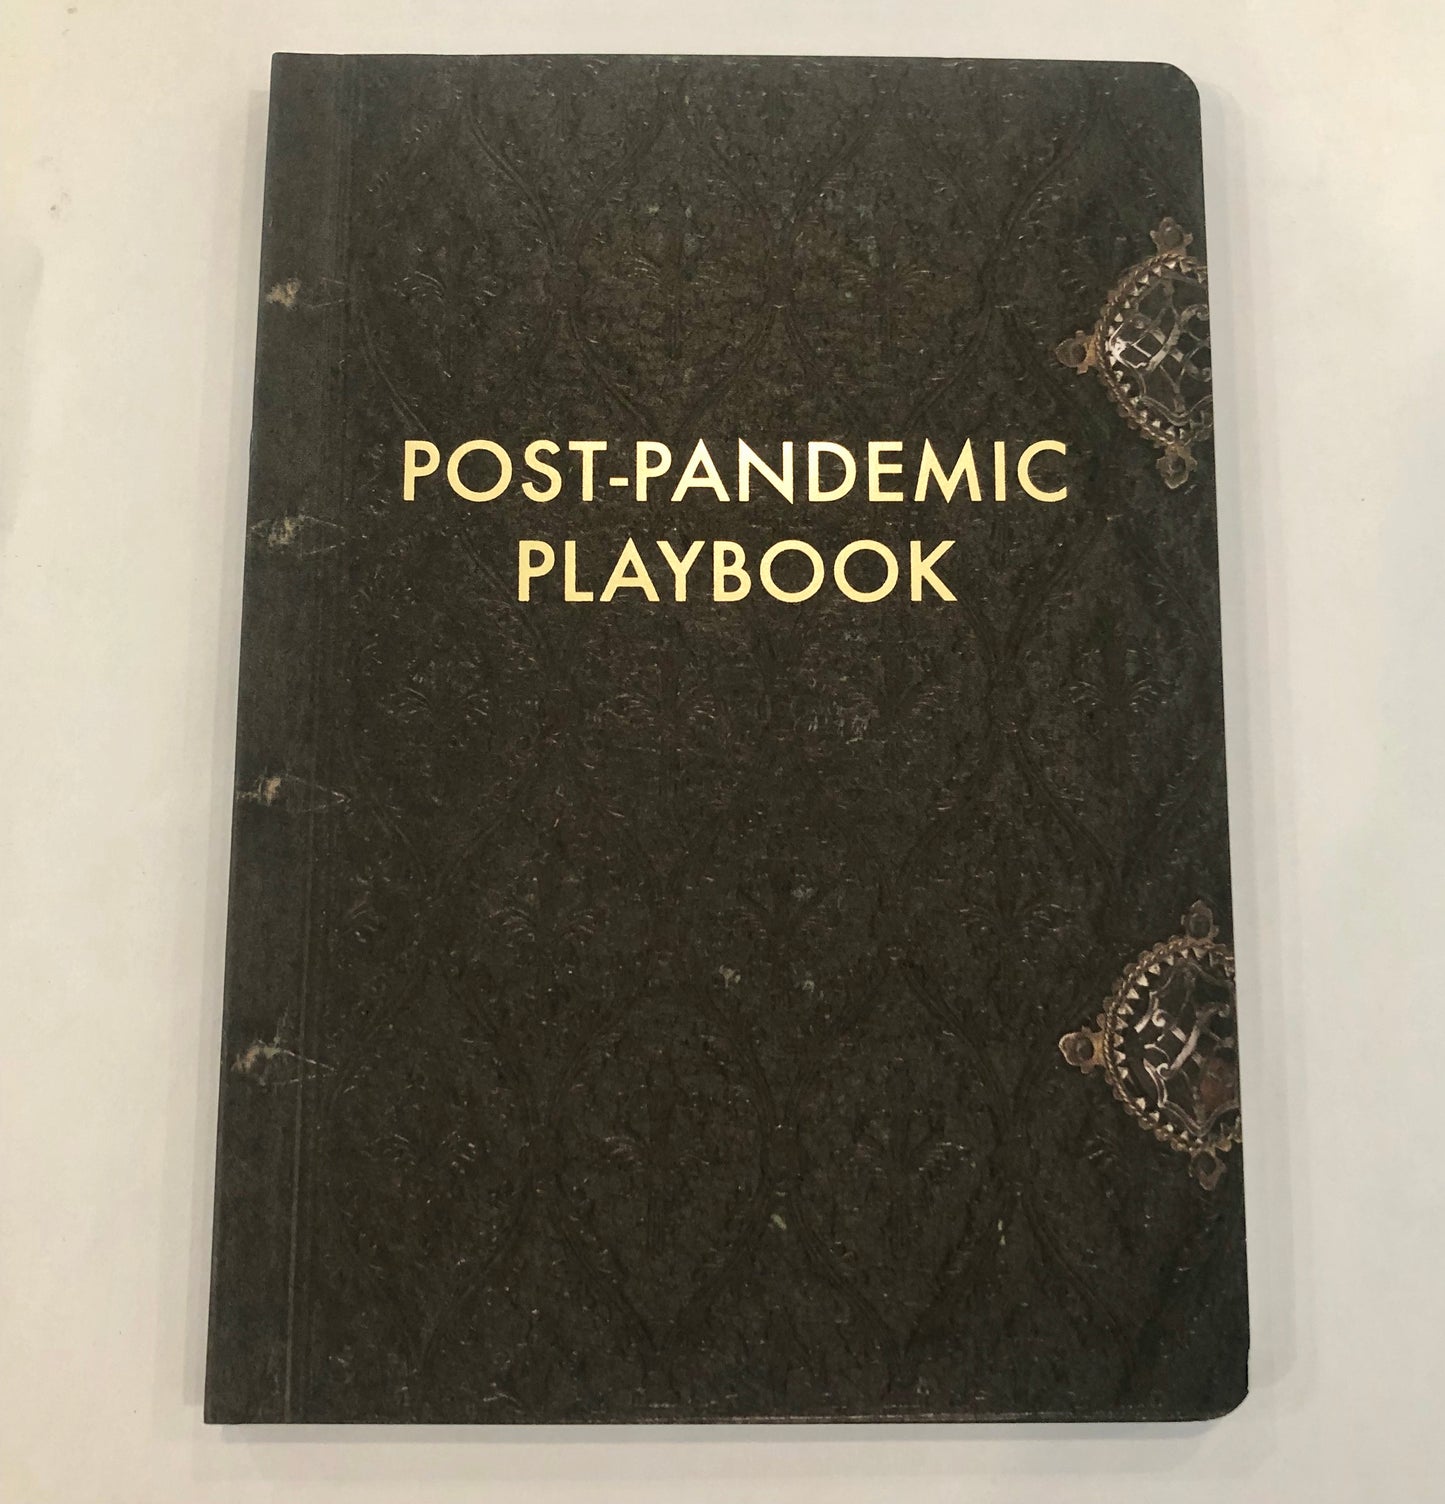 Journal, Post-Pandemic Playlist